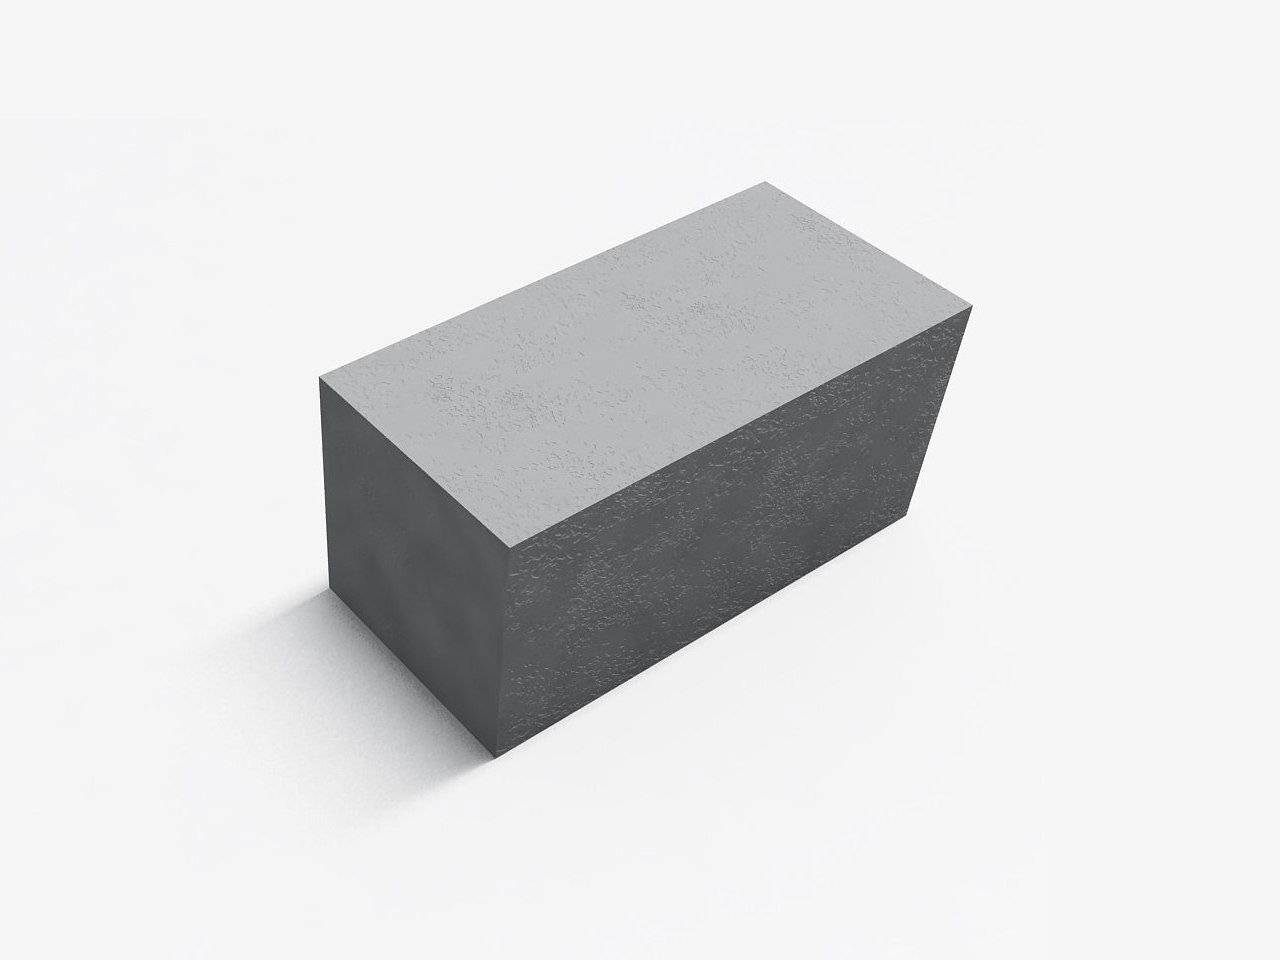 Блоки из бетона размером 400х200х200 мм